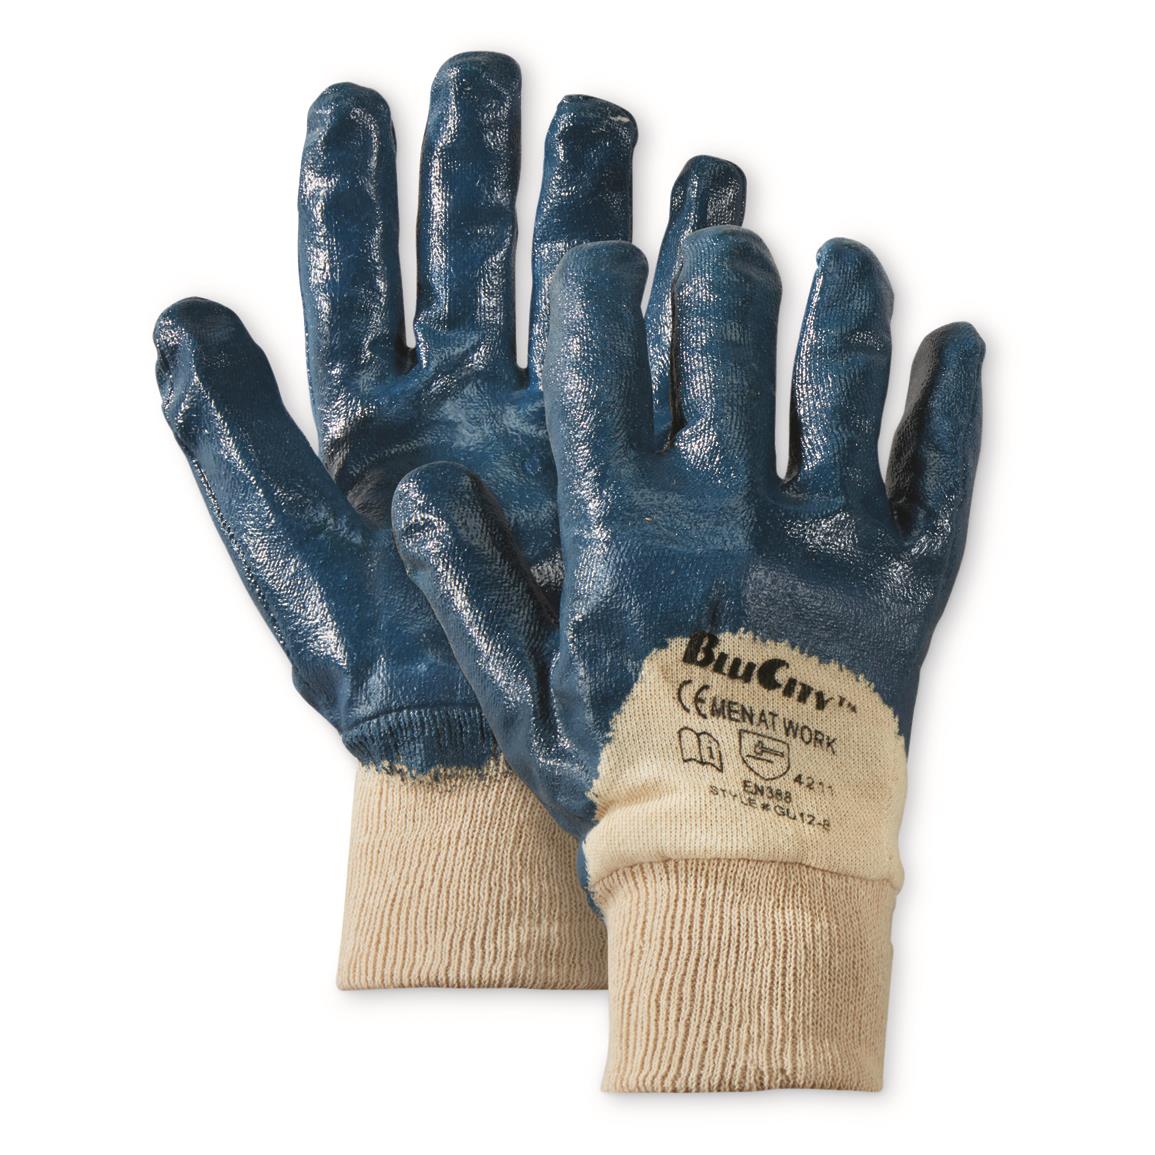 Italian Municipal Surplus Rubberized Work Gloves, 15 pairs, New